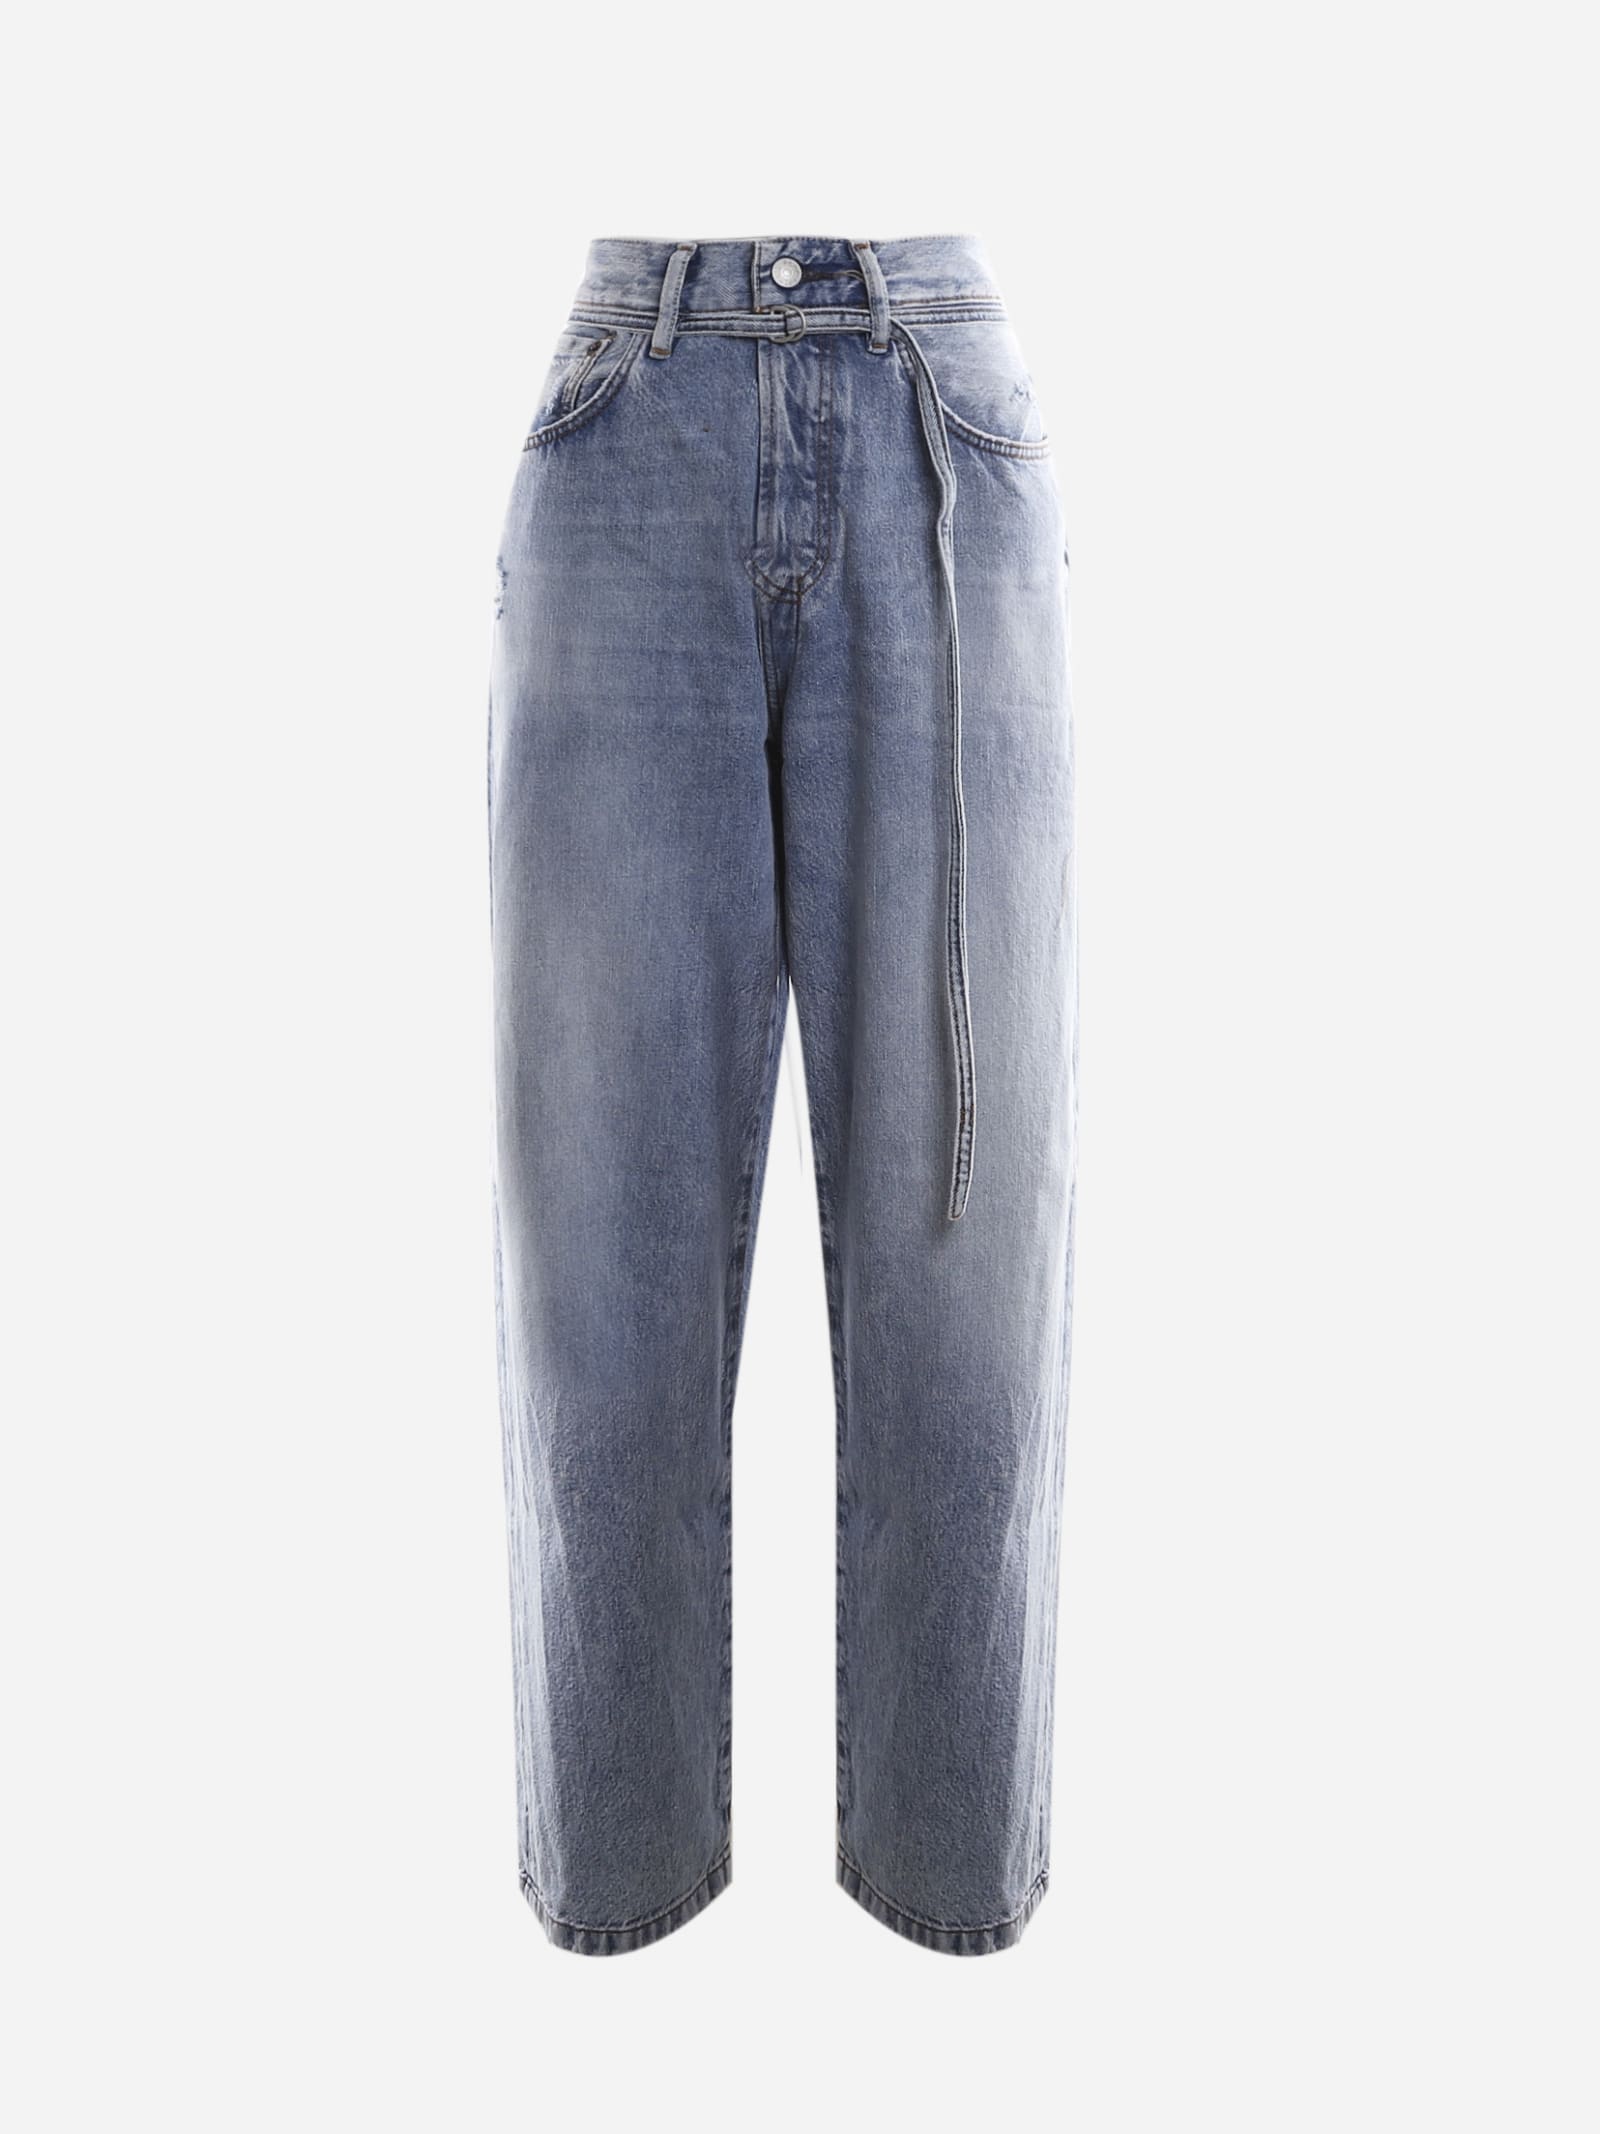 Acne Studios Toj Jeans In Cotton Denim With Faded Effect